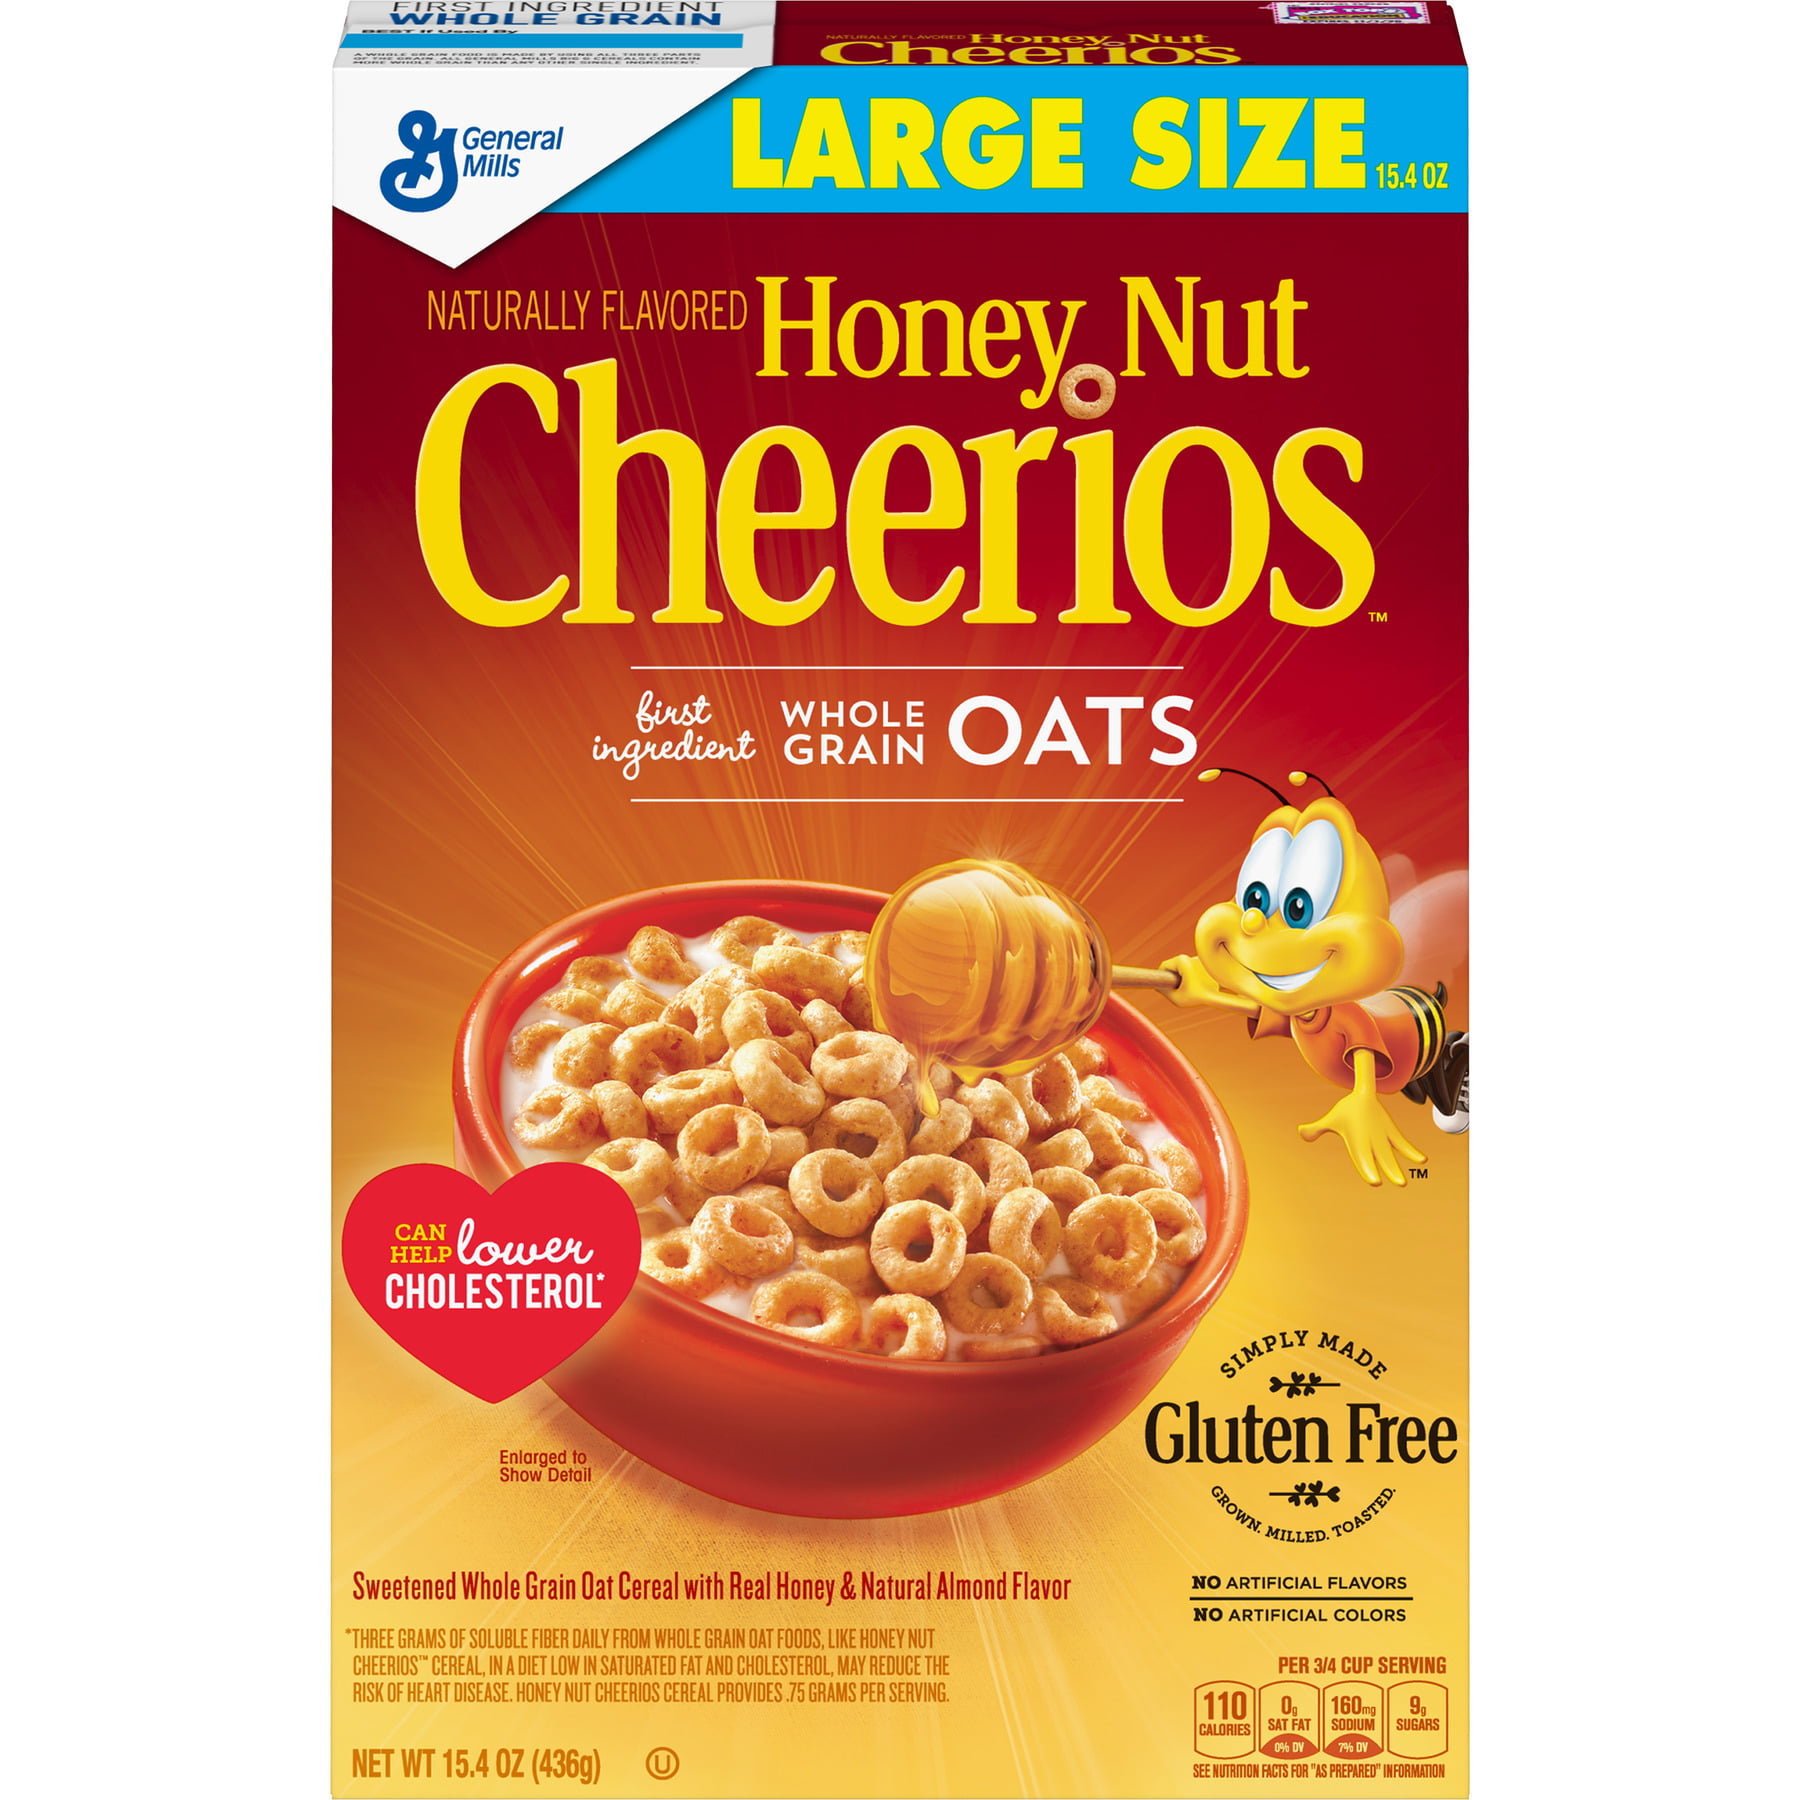 Honey Nut Cheerios Heart Healthy Gluten Free Breakfast Cereal, Large